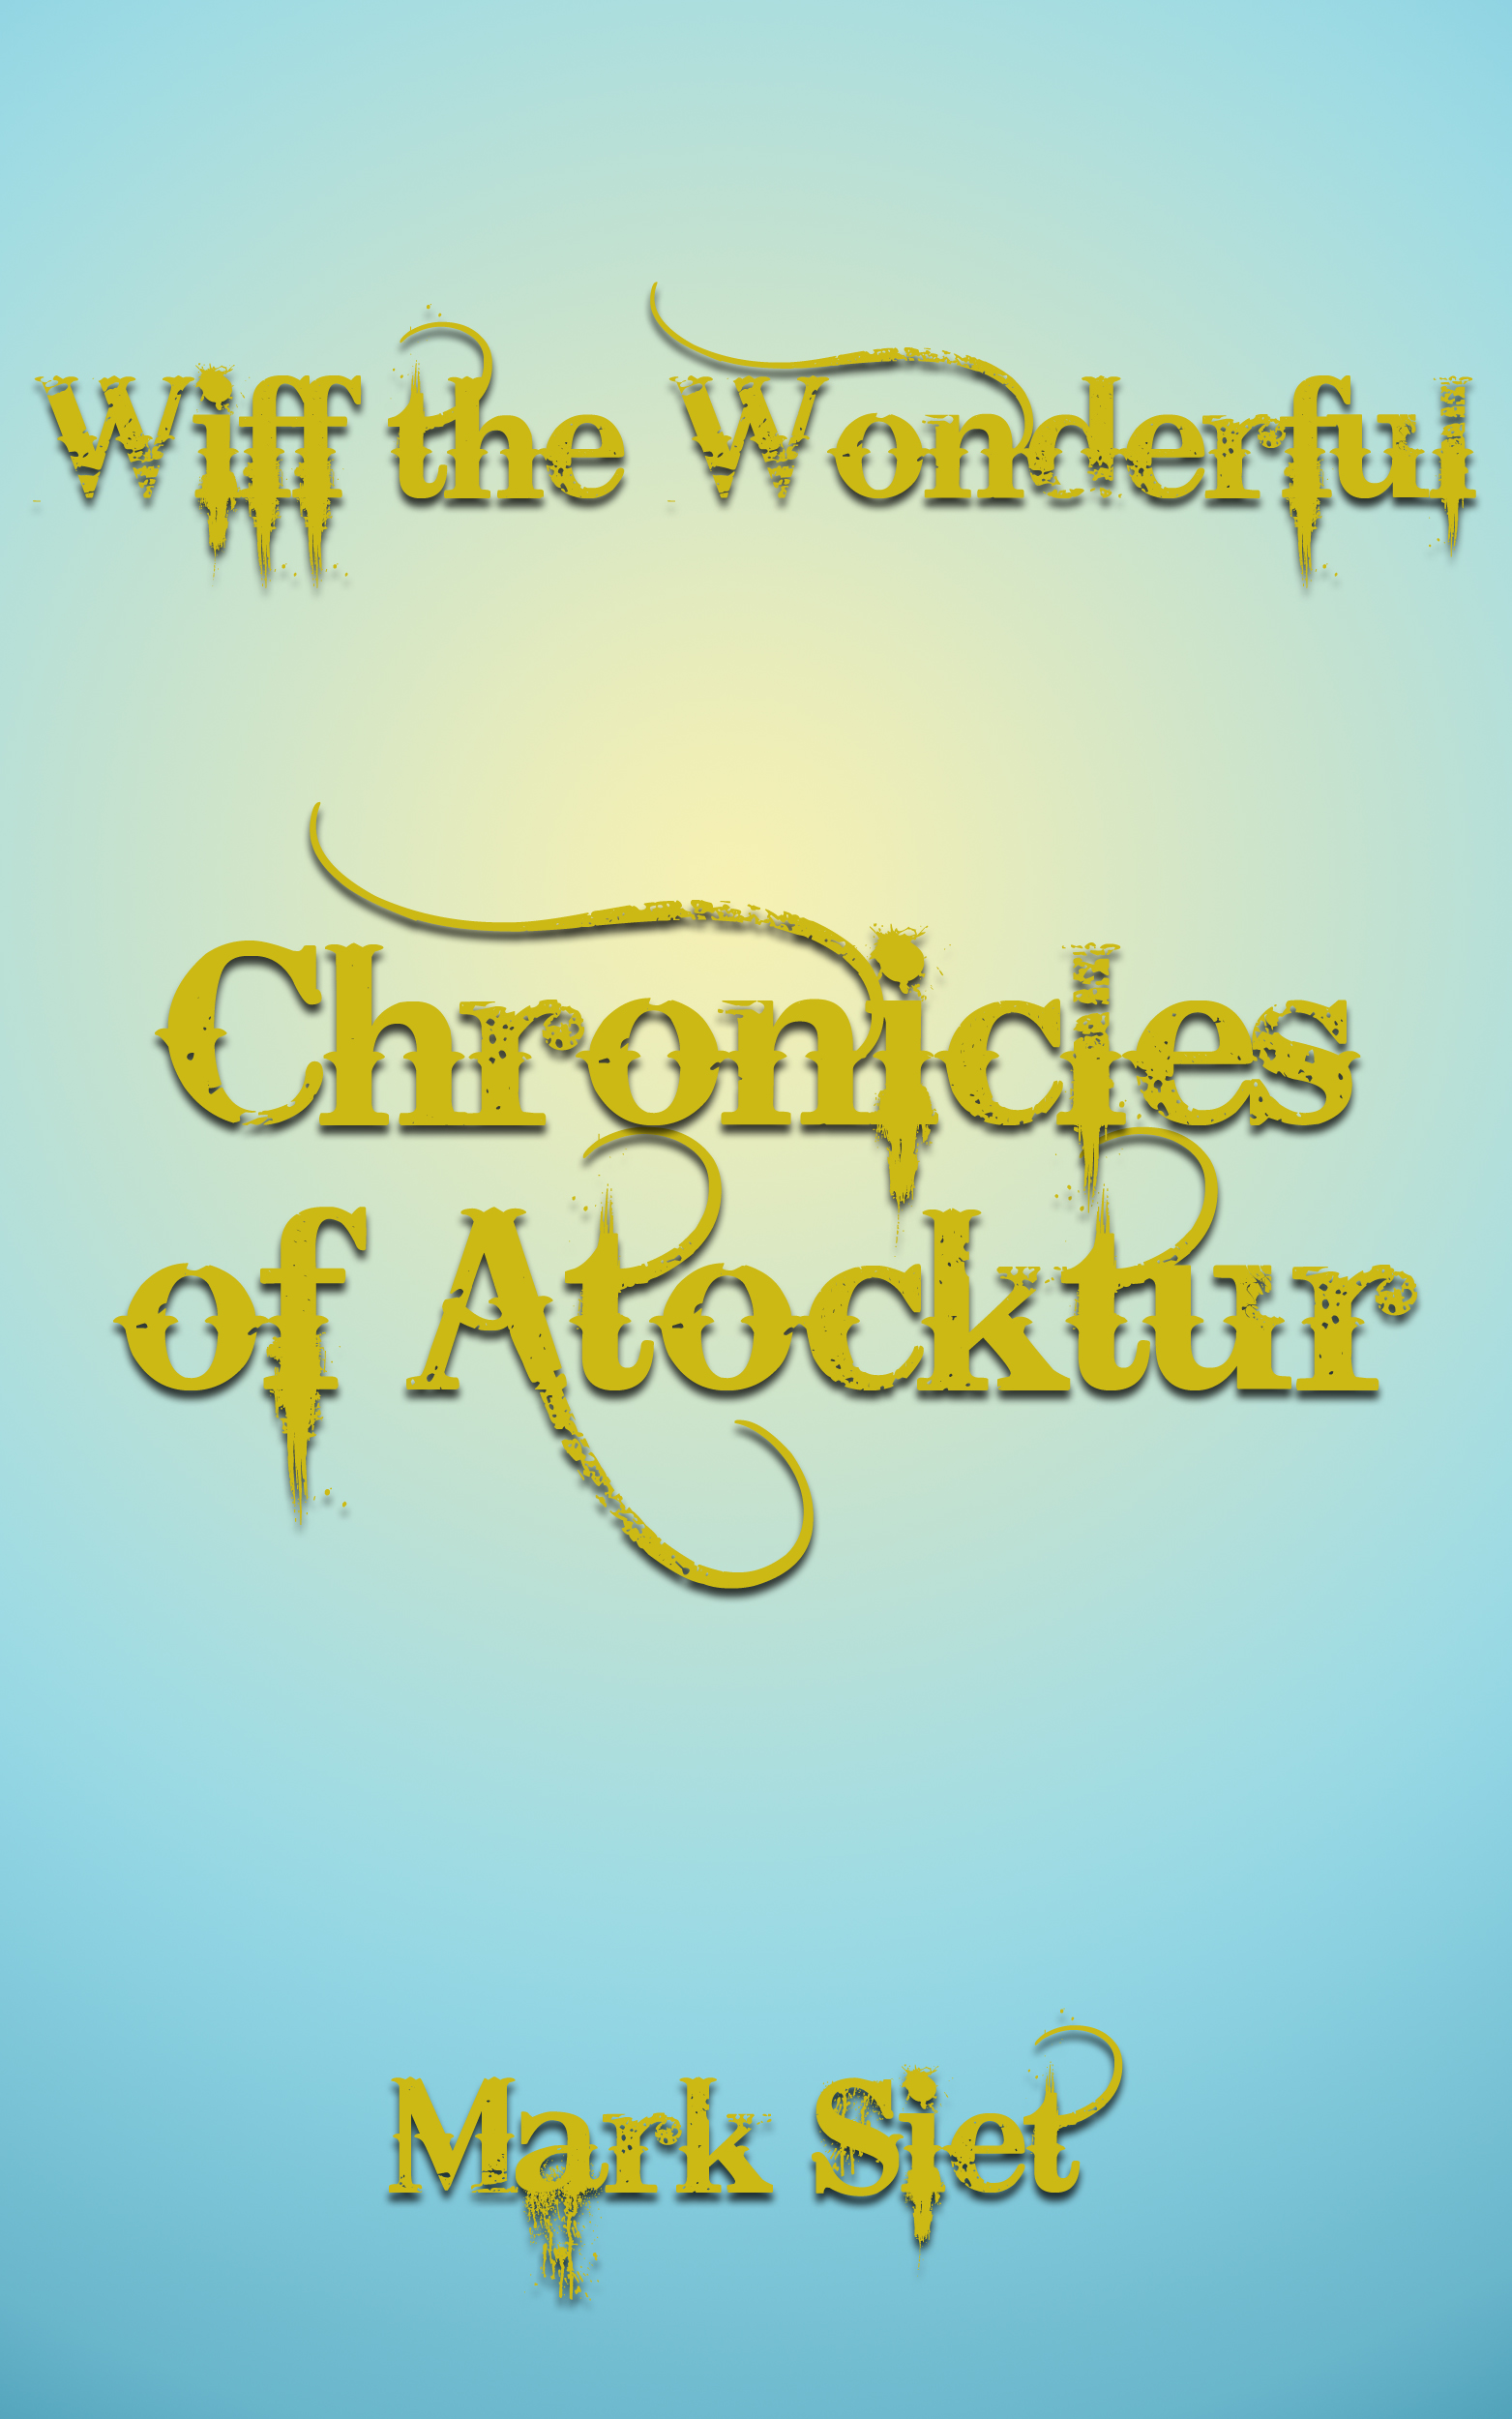 Wiff The Wonderful: Chronicles of Atocktur